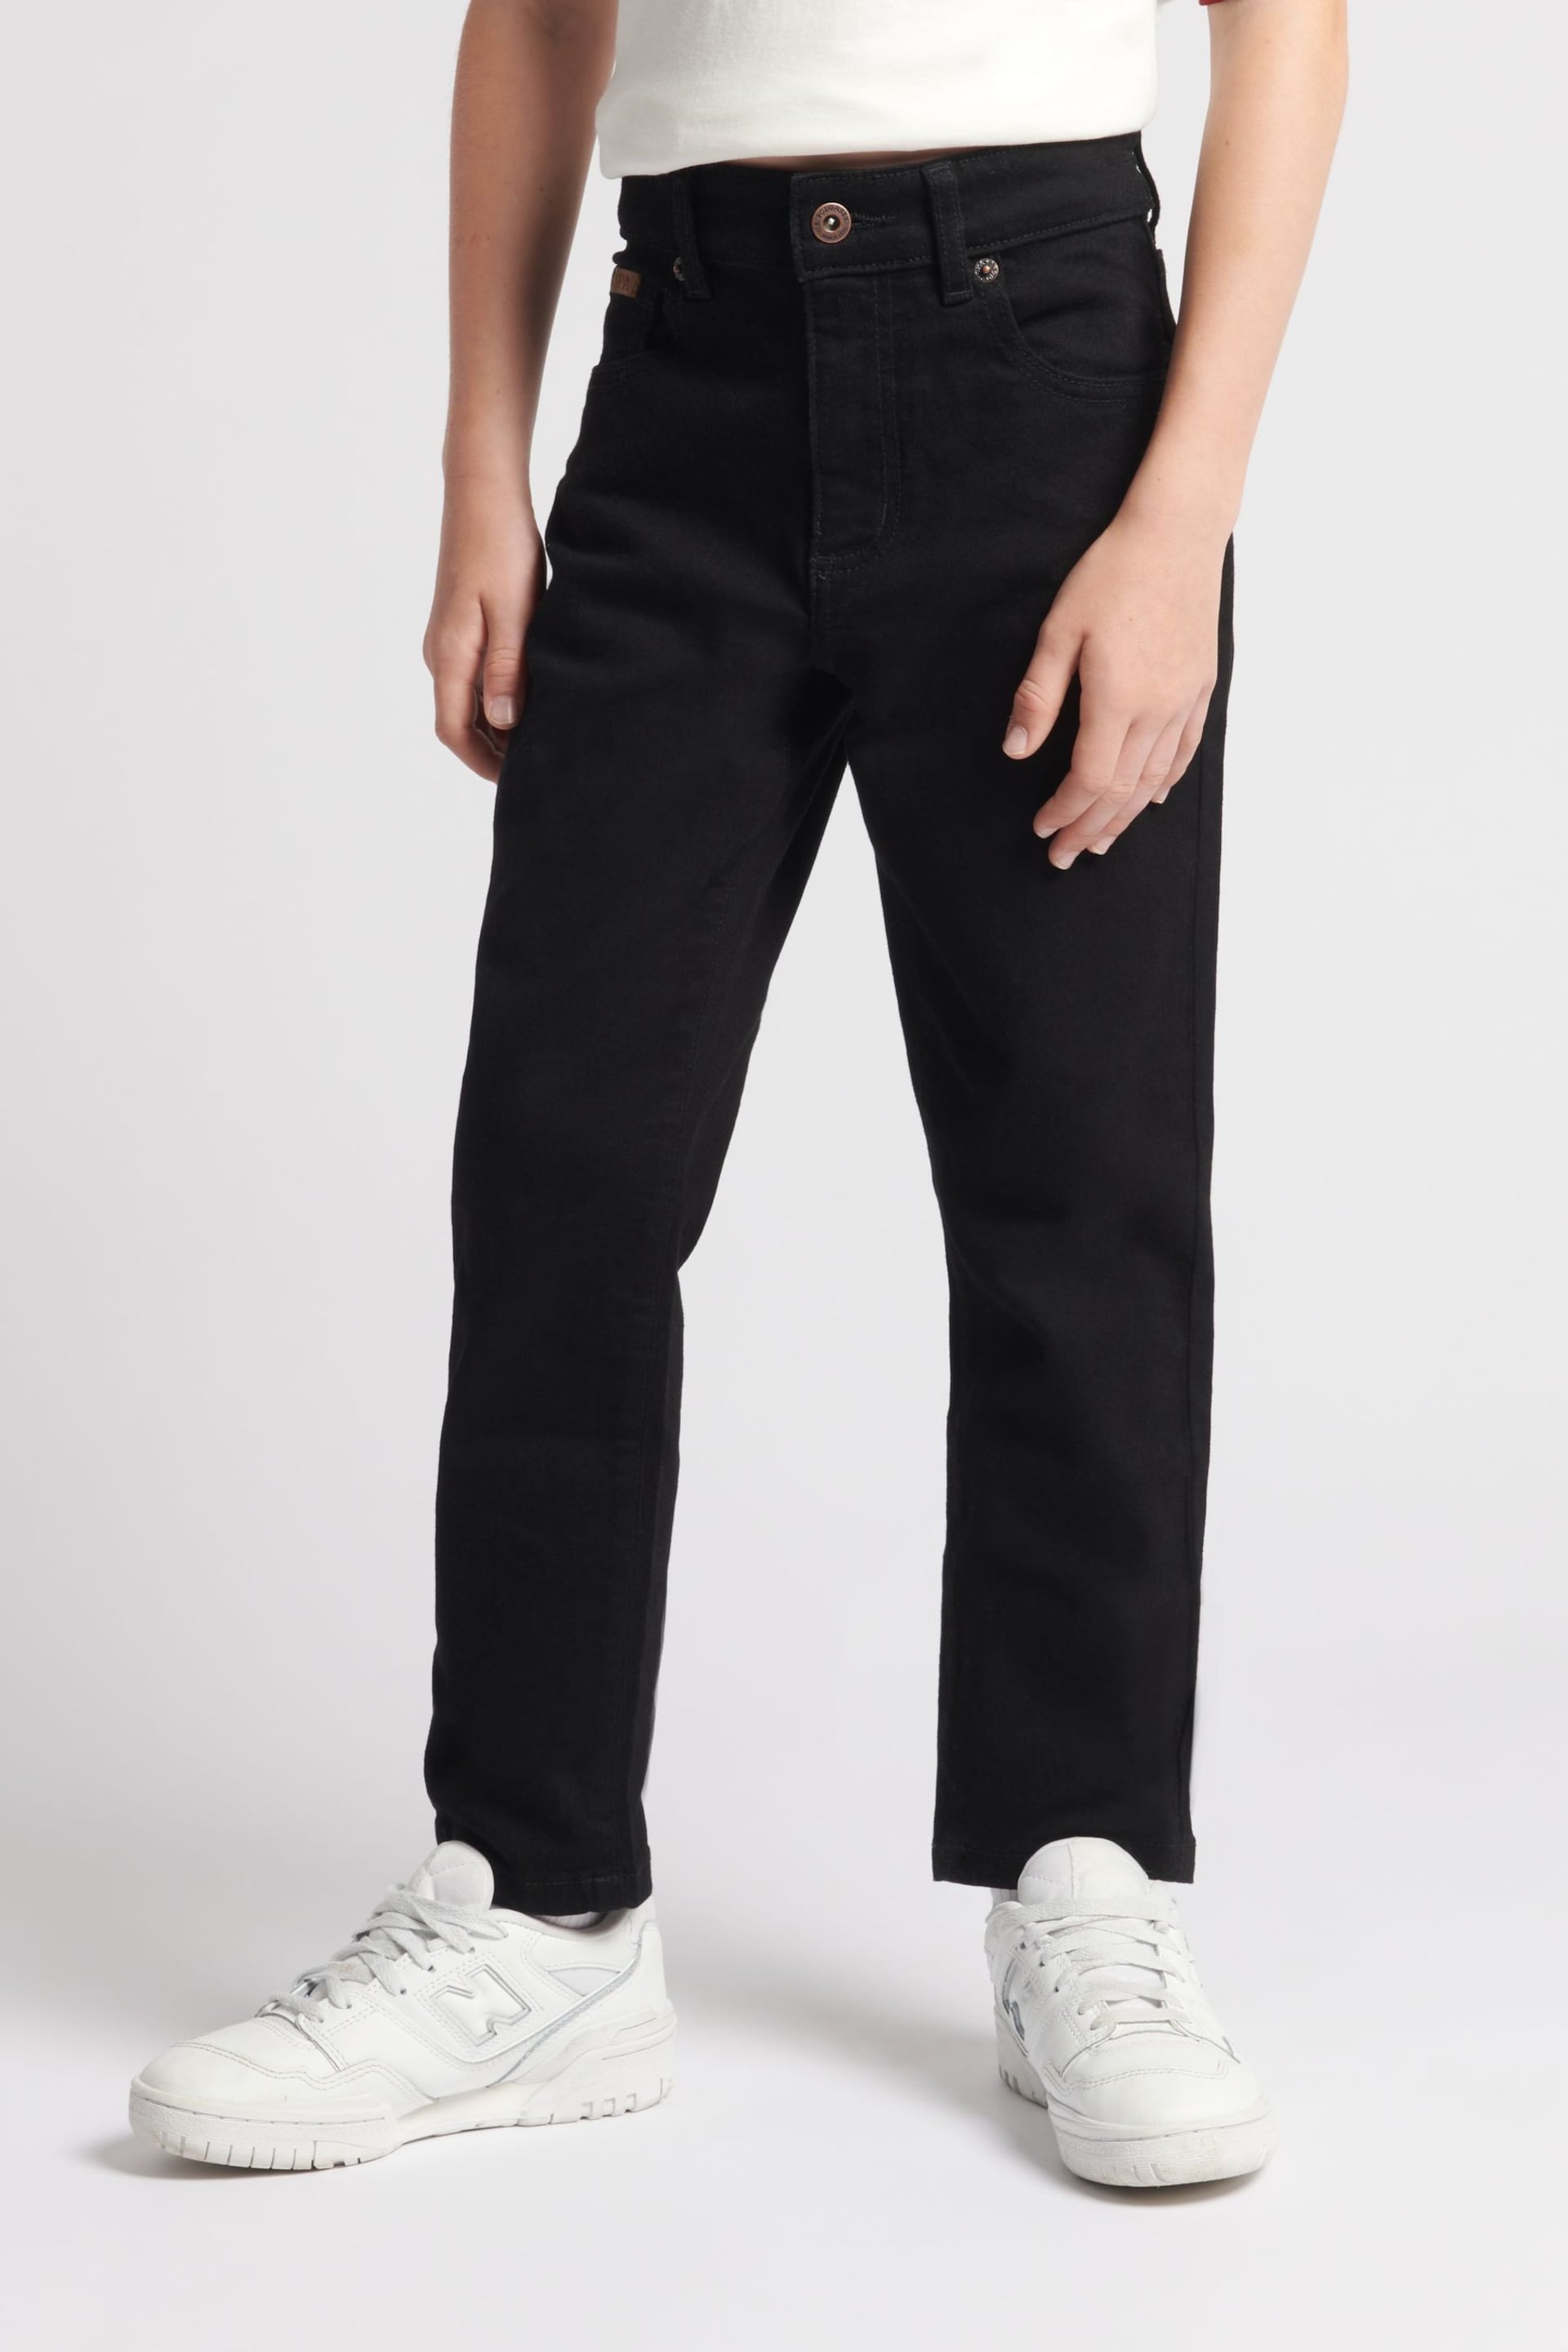 U.S. Polo Assn. Boys 5 Pocket Slim Fit Denim Black Jeans - Image 1 of 7